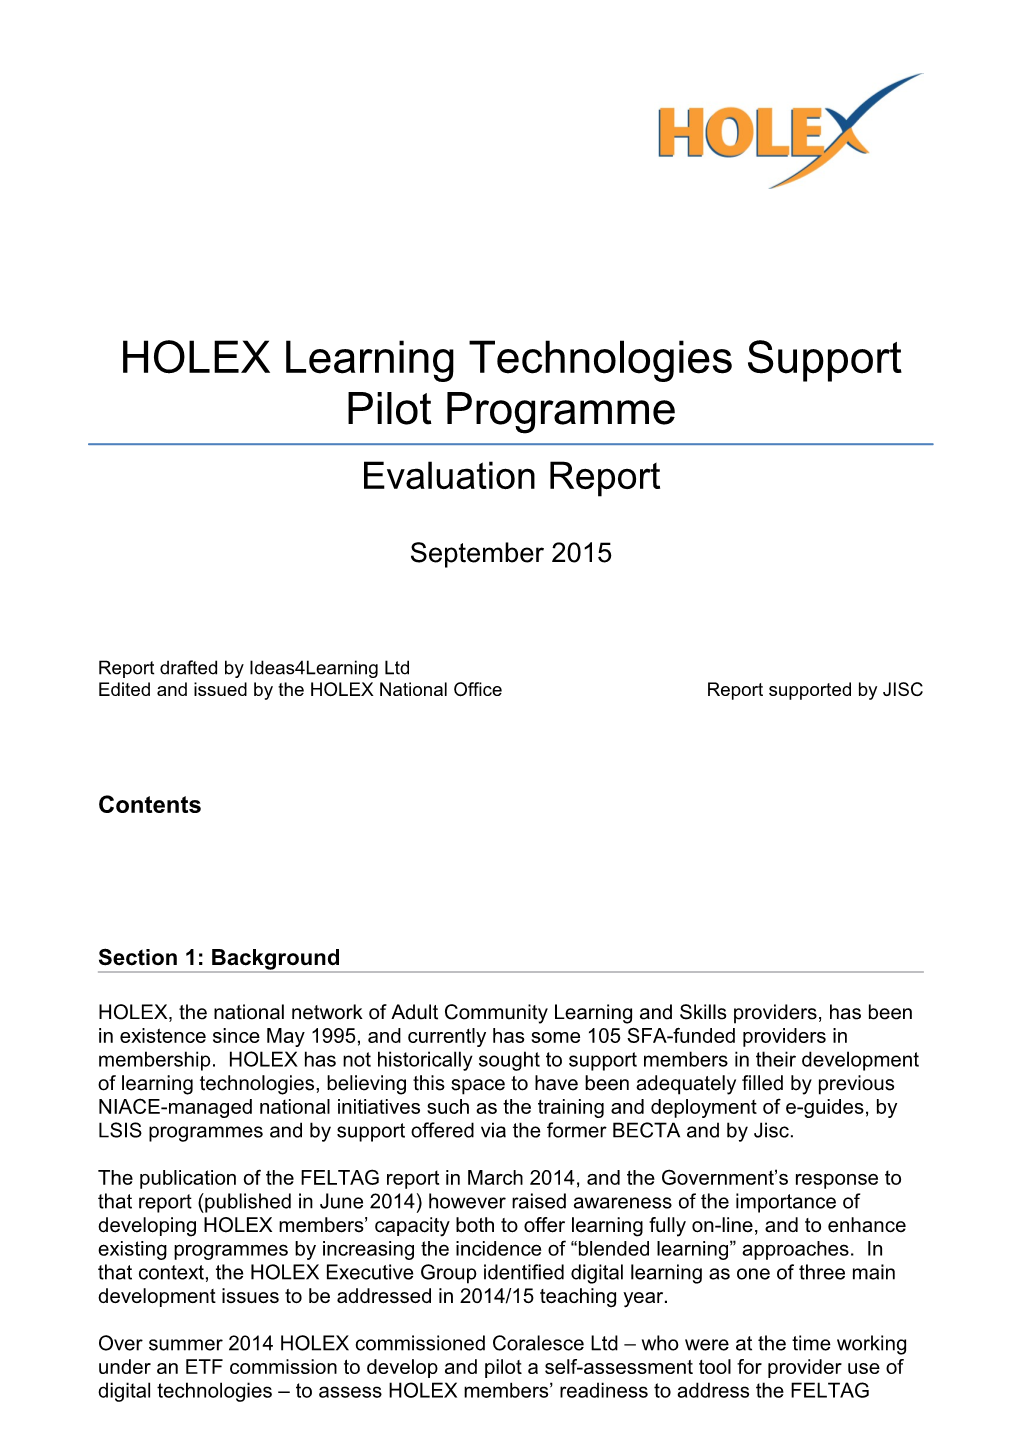 HOLEX Learning Technologies Support Pilot Programme